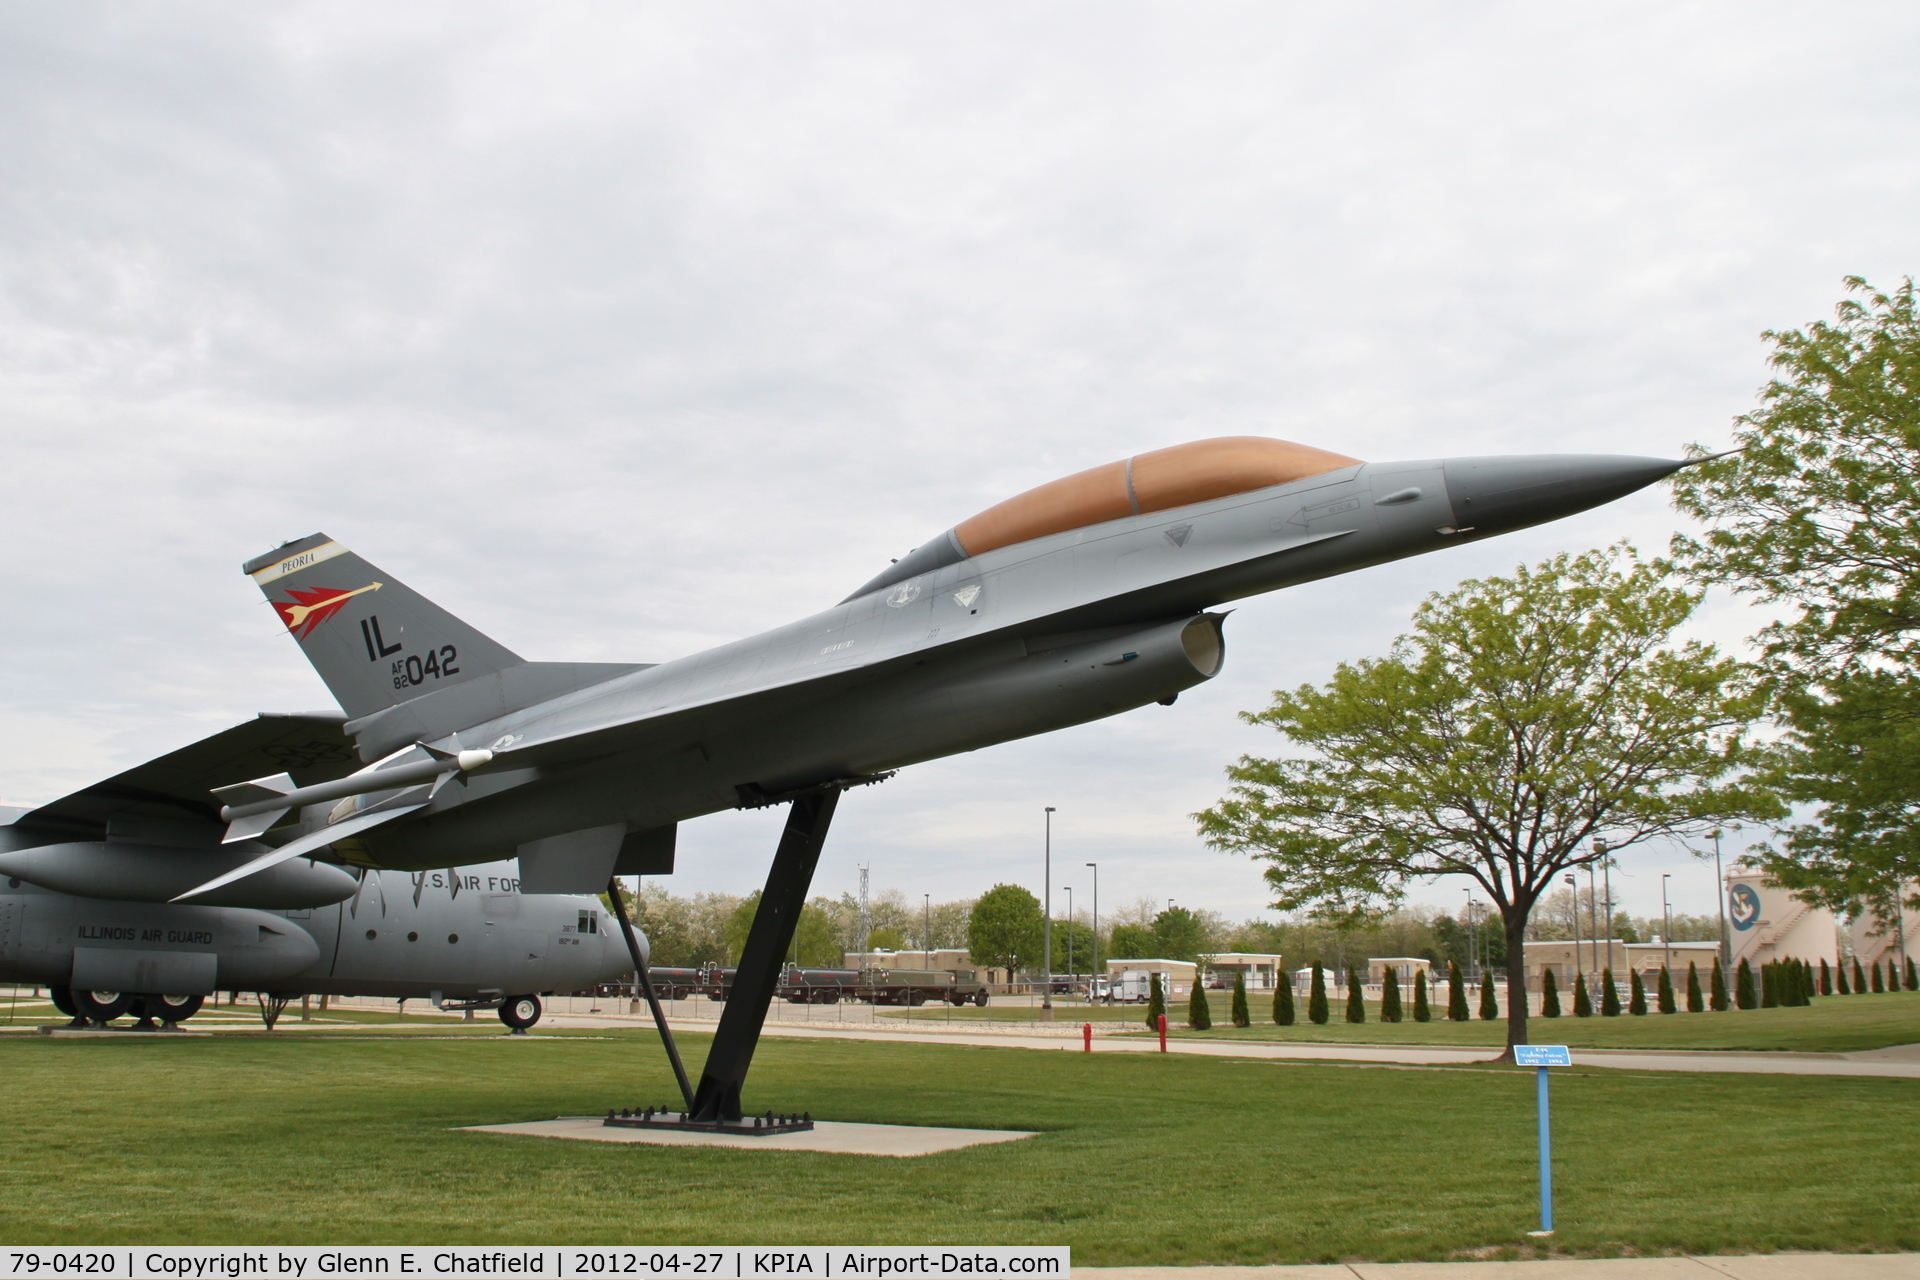 79-0420, 1979 General Dynamics F-16B C/N 62-52, At the Air Park